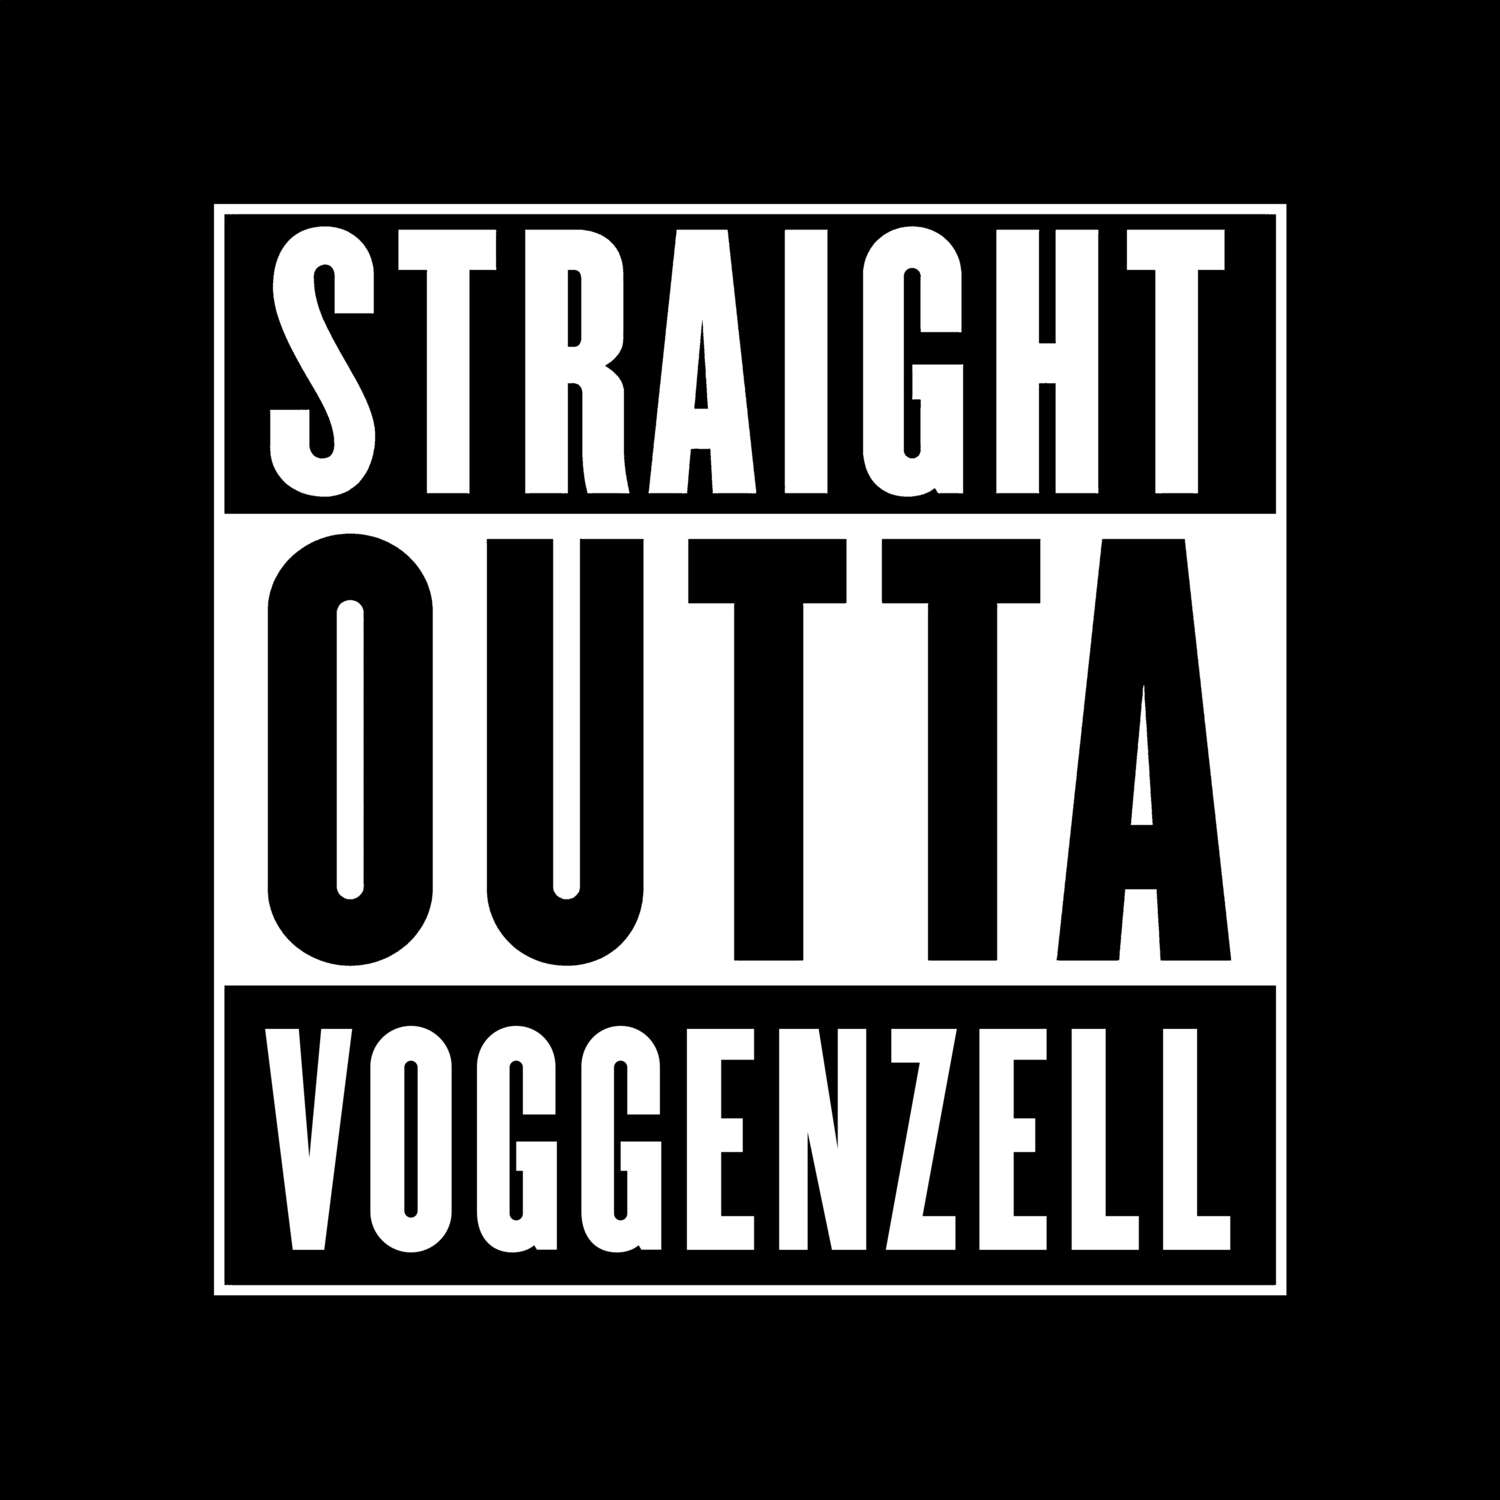 Voggenzell T-Shirt »Straight Outta«